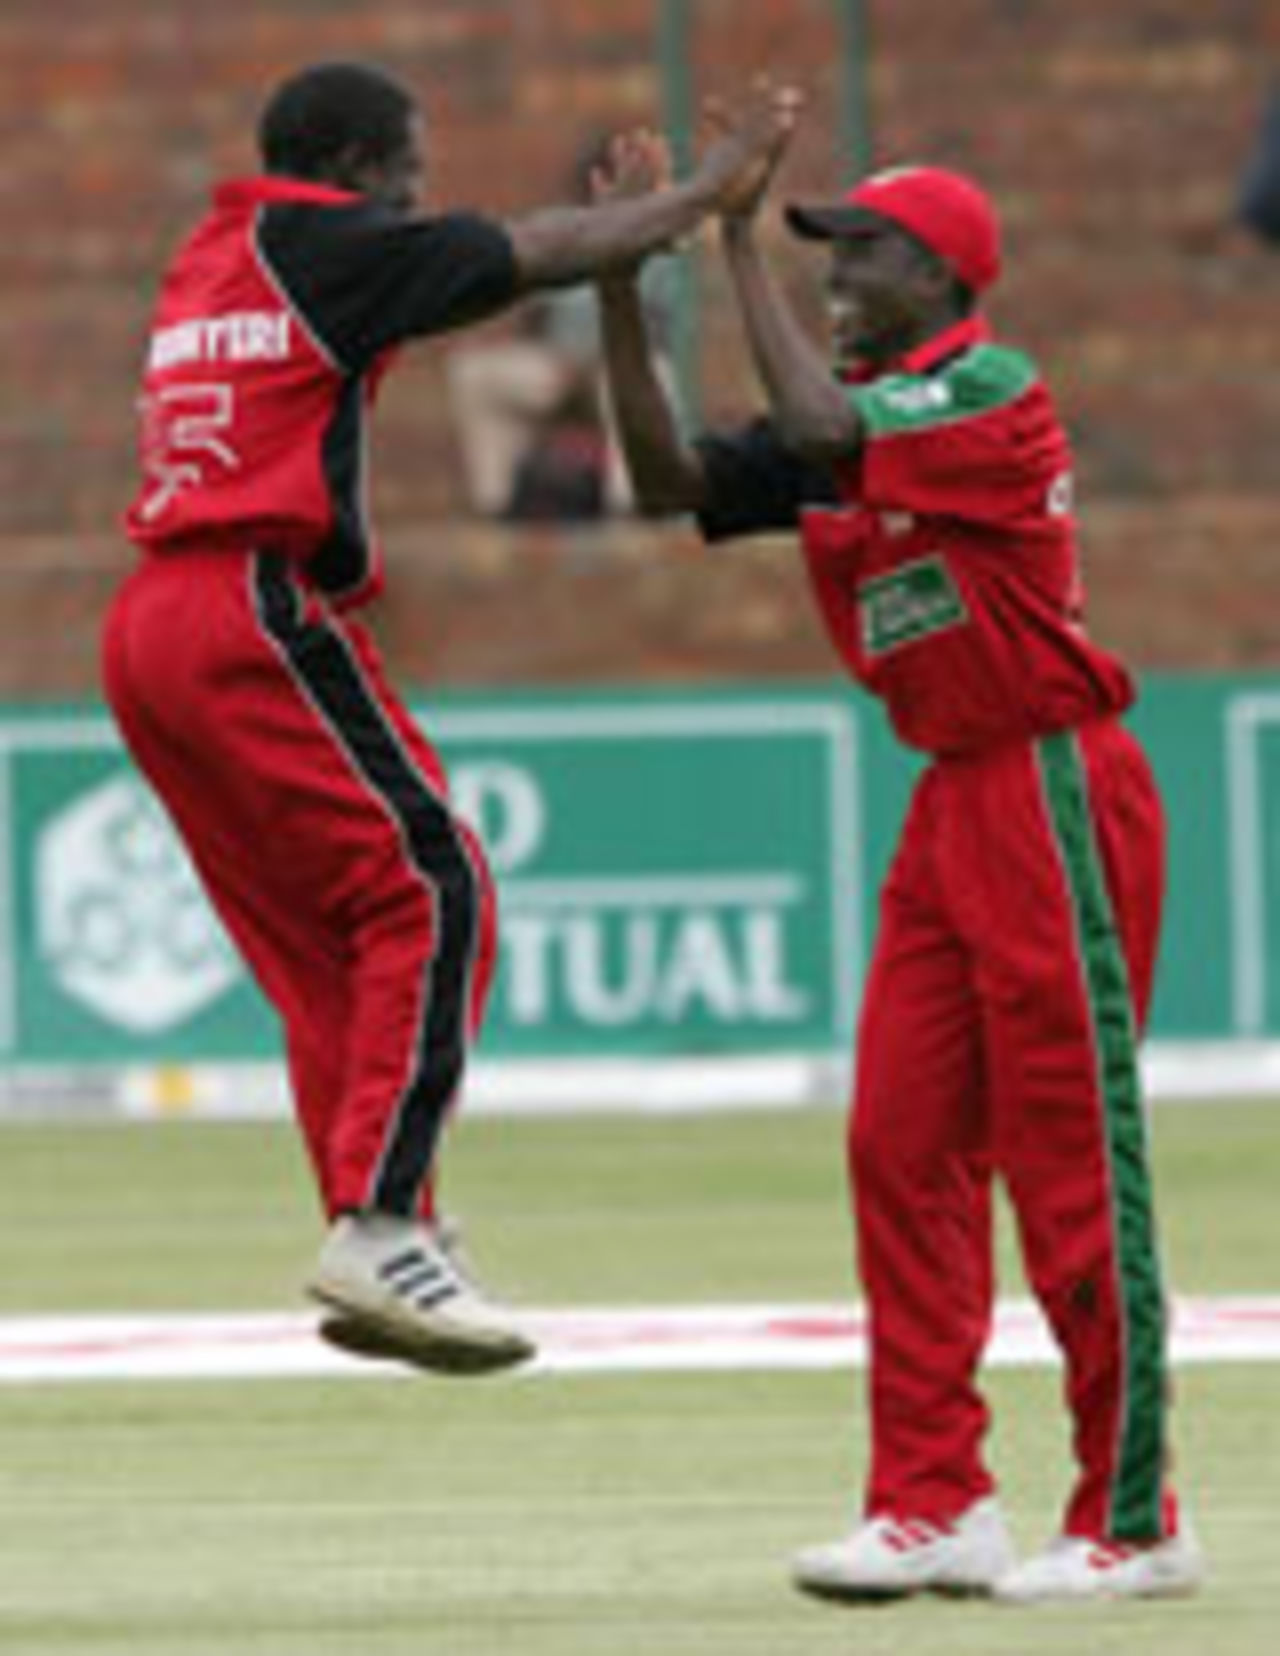 Stuart Matsikenyeri (L) and Elton Chigumbura celebrate Ian Bell's dismissal, Zimbabwe v England, 4th ODI, Bulawayo, December 5 2004